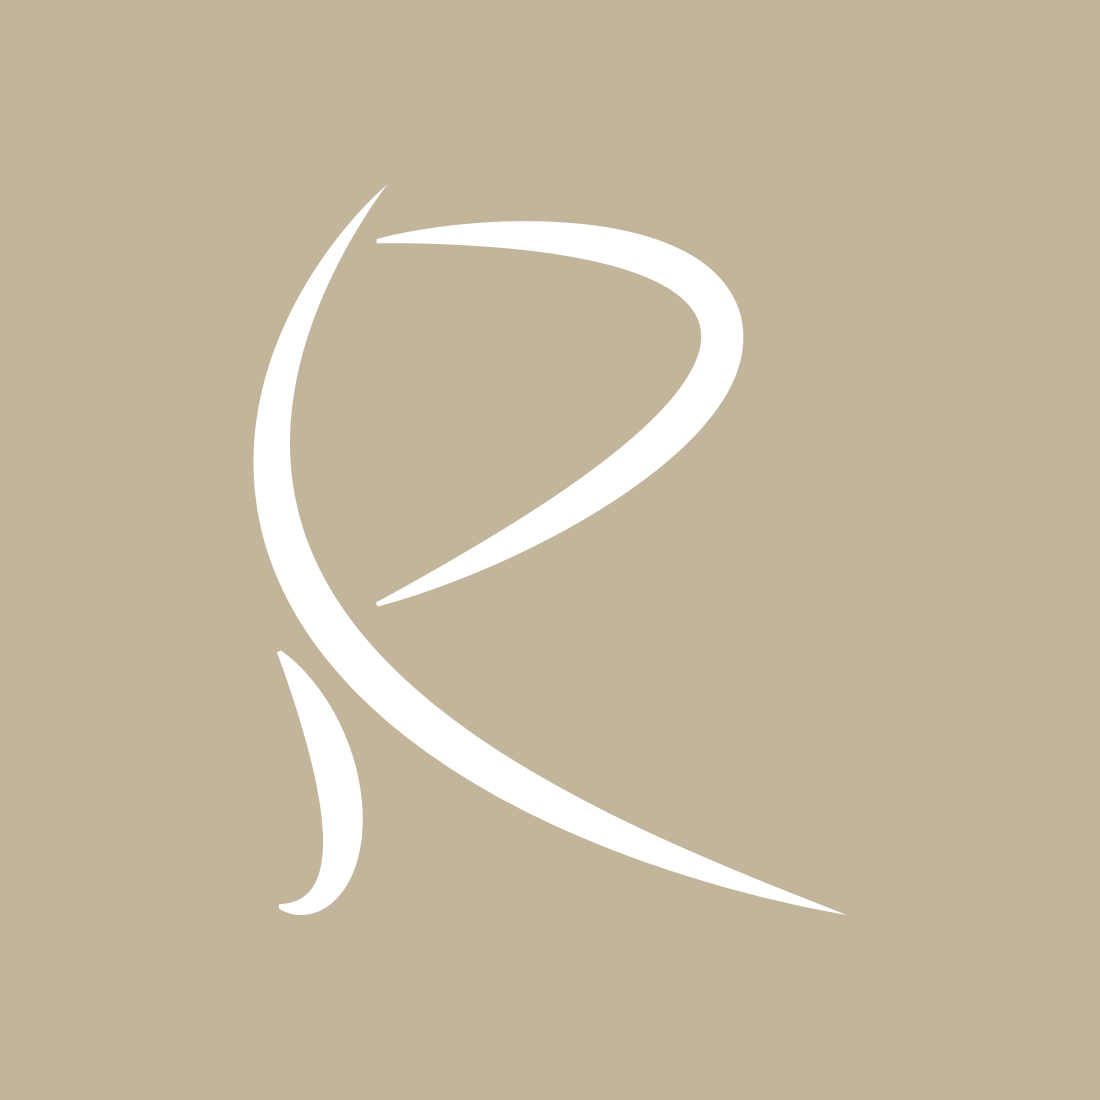 R Letter Logo presentation.